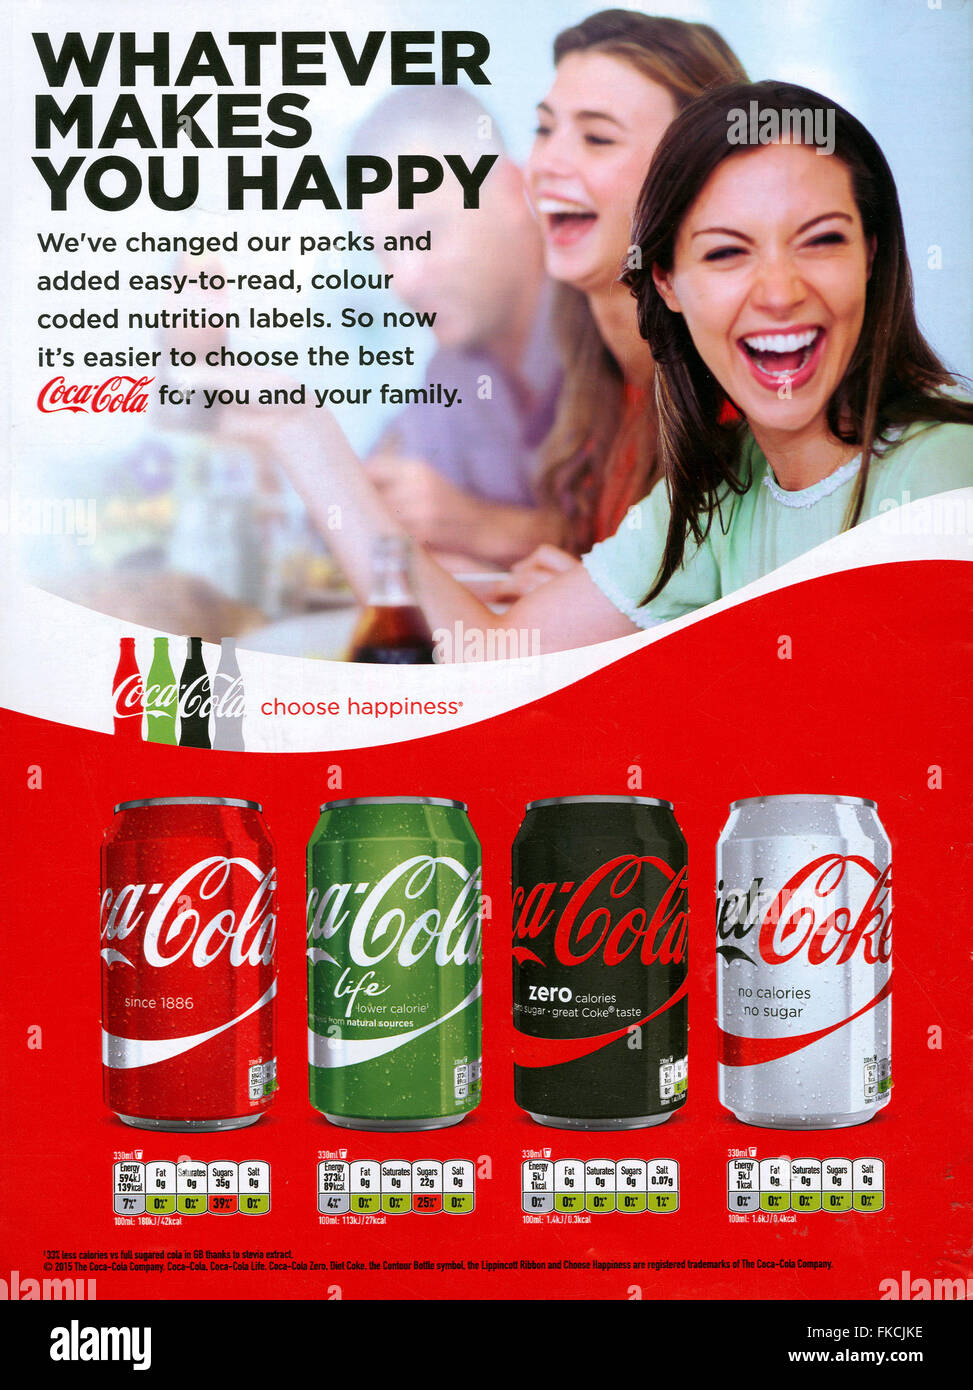 Advertisements For Coke